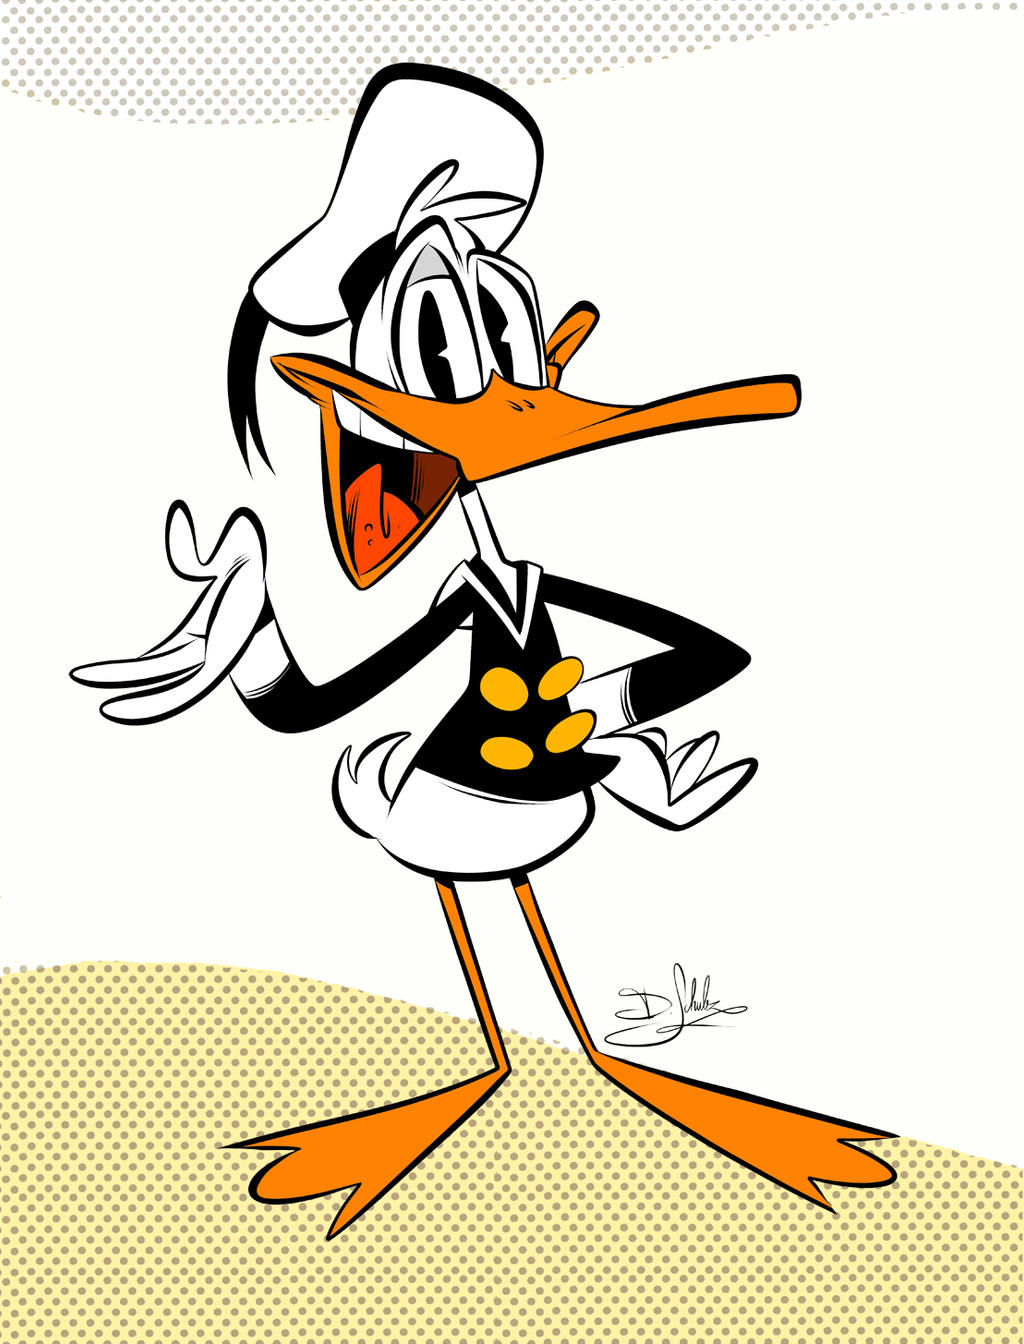 Donald Duck 2017